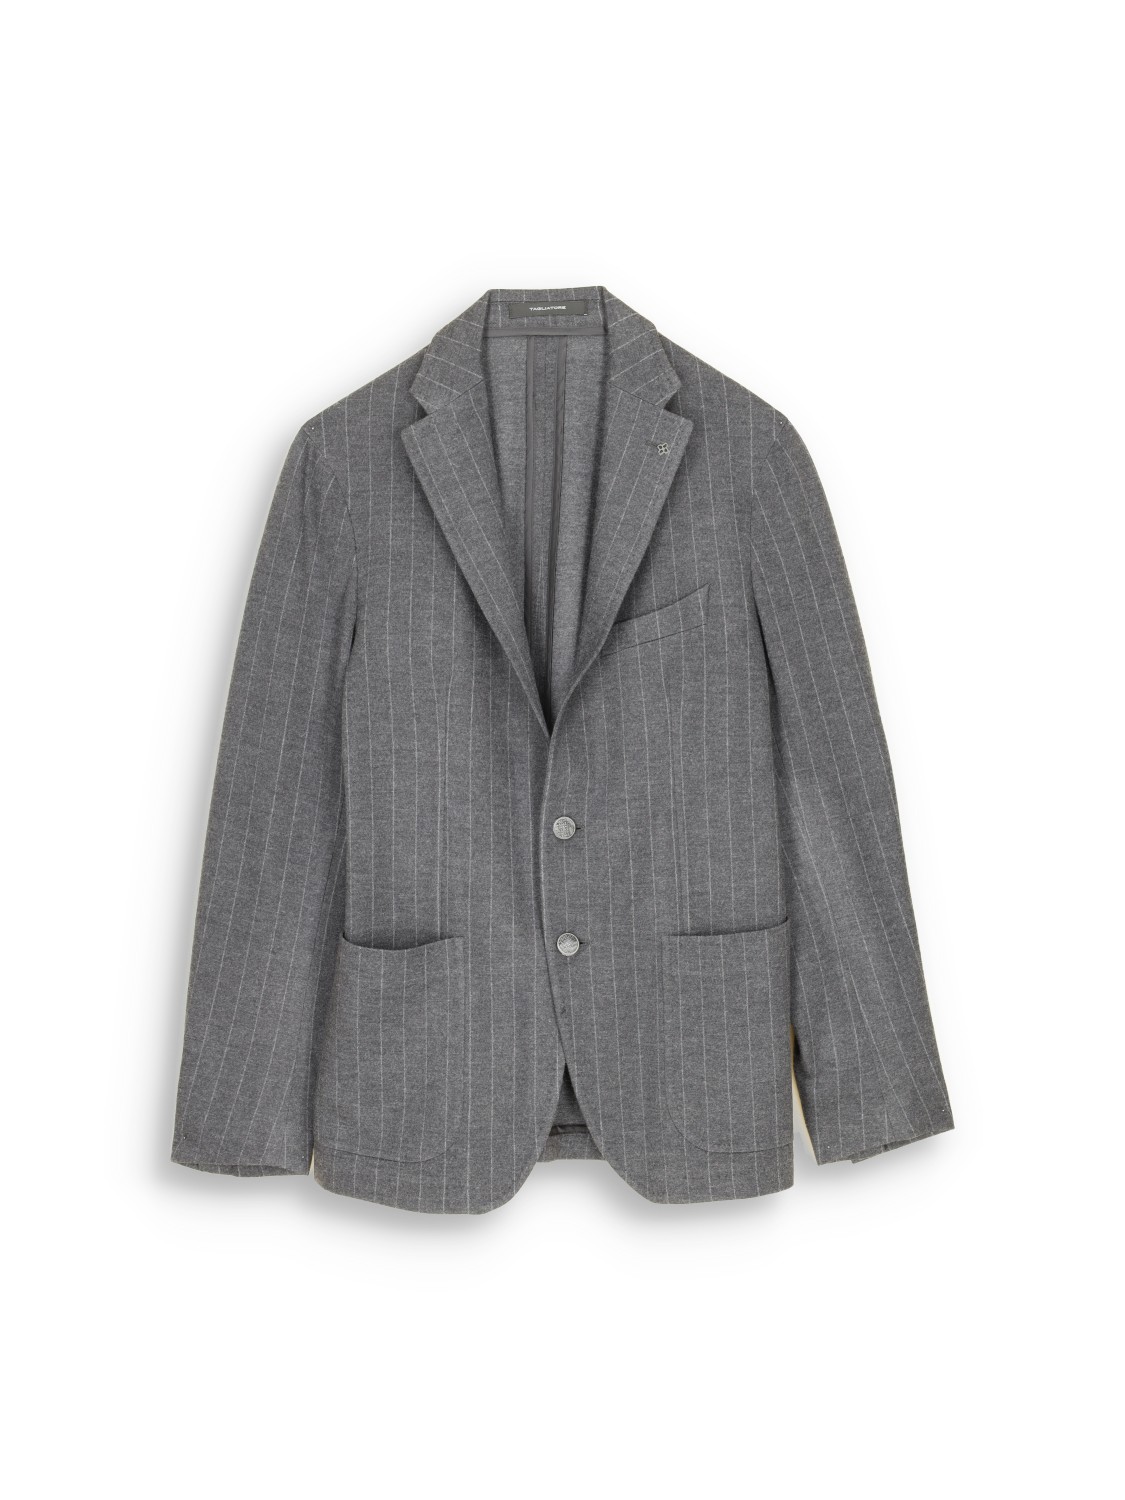 Tagliatore pinstripe suit with pure new wool - costume à rayures en laine vierge mélangée  grau 48